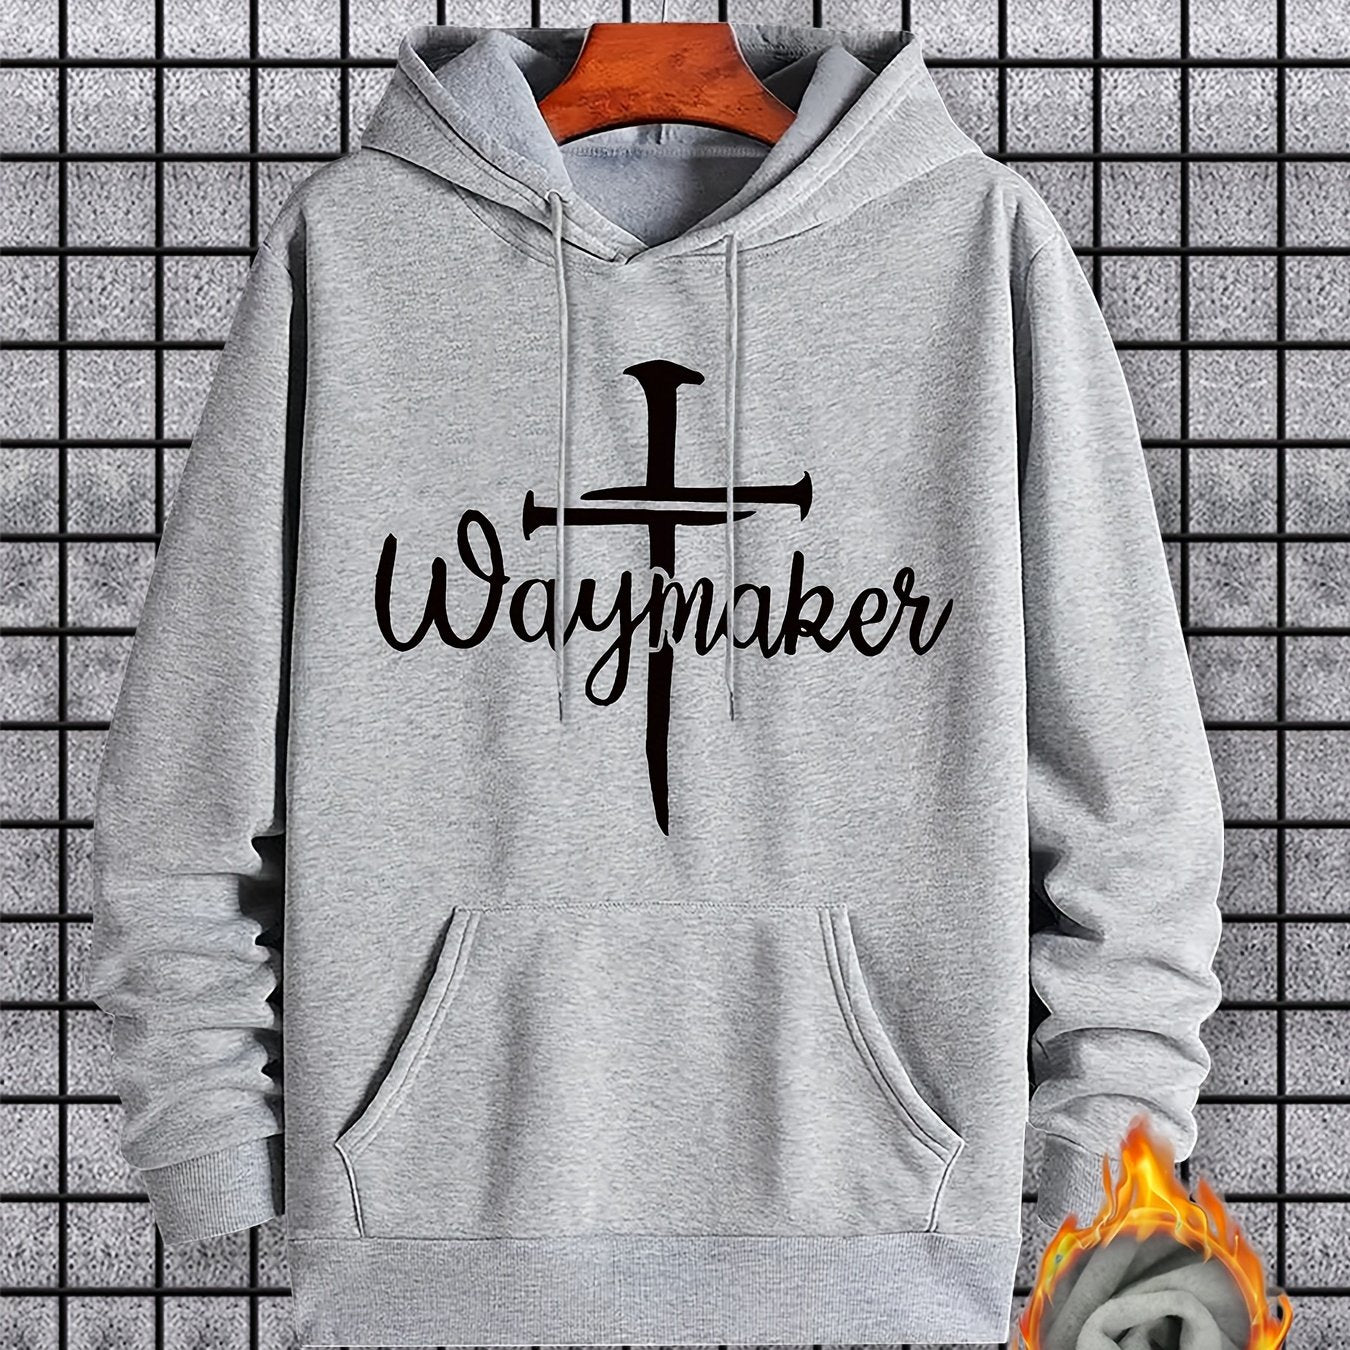 Waymaker Men's Christian Pullover Hooded Sweatshirt claimedbygoddesigns